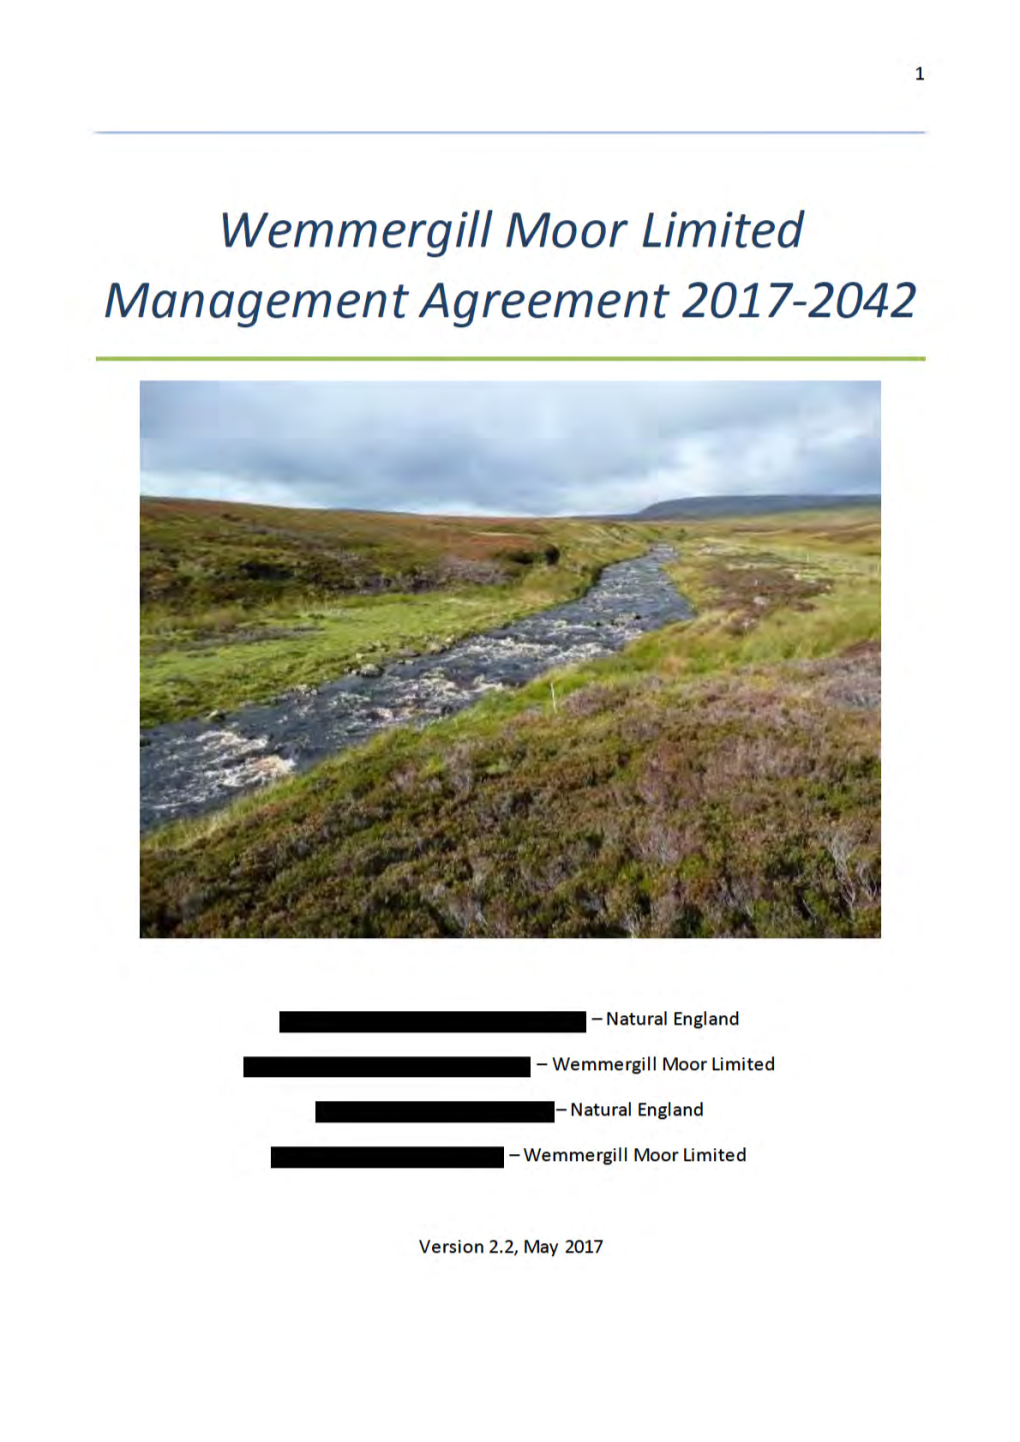 Wemmergill Moor Limited Management Agreement 2017-2042